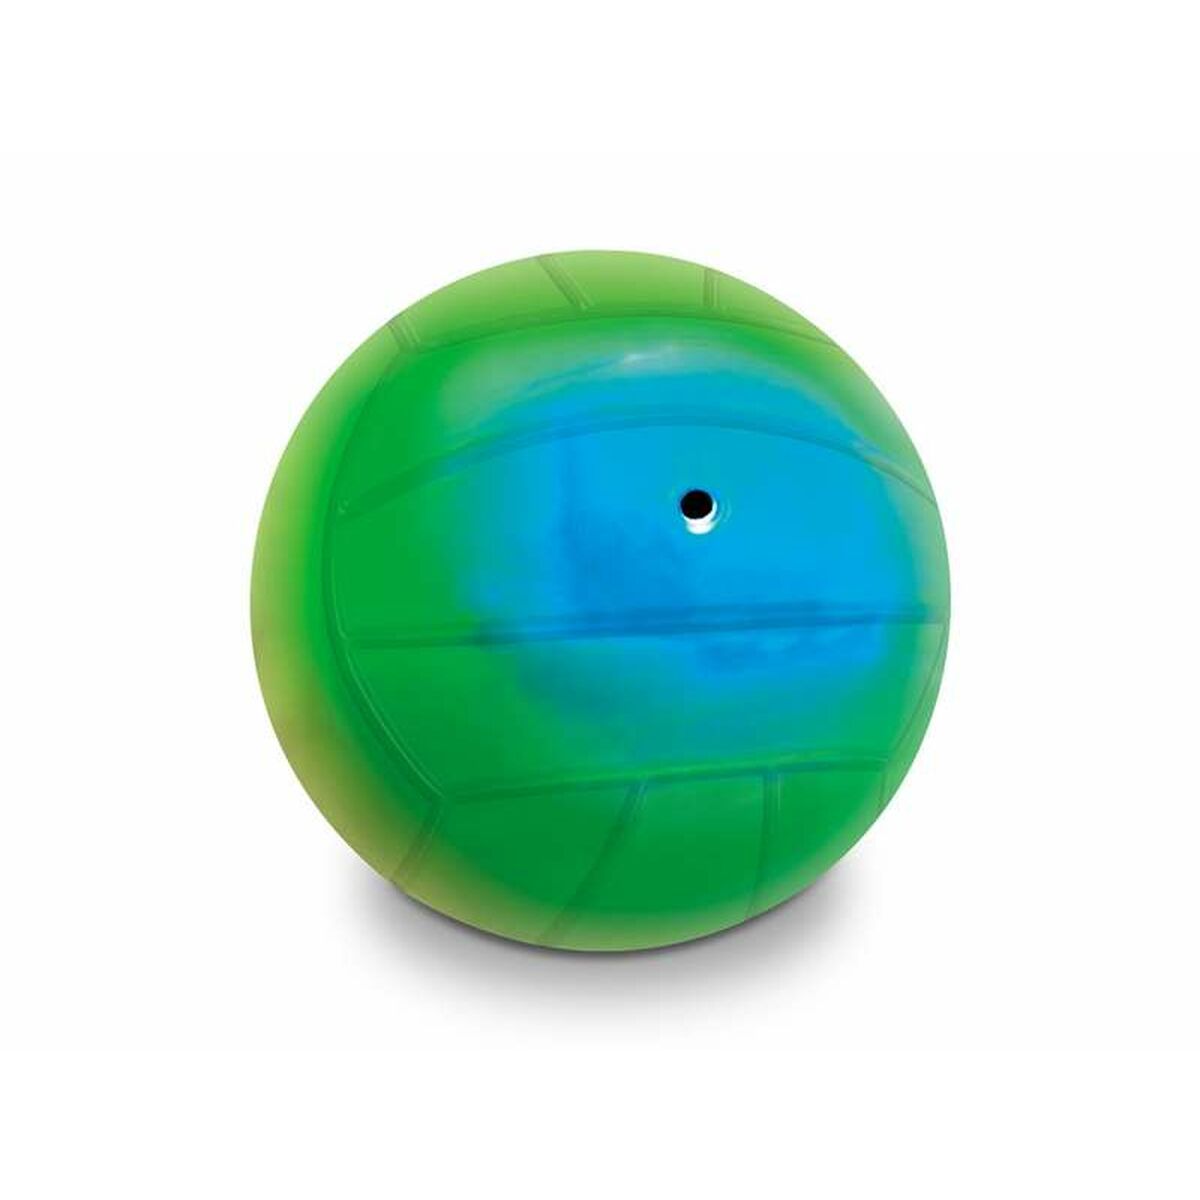 Strandball Unice Toys Bioball Rainbow Match